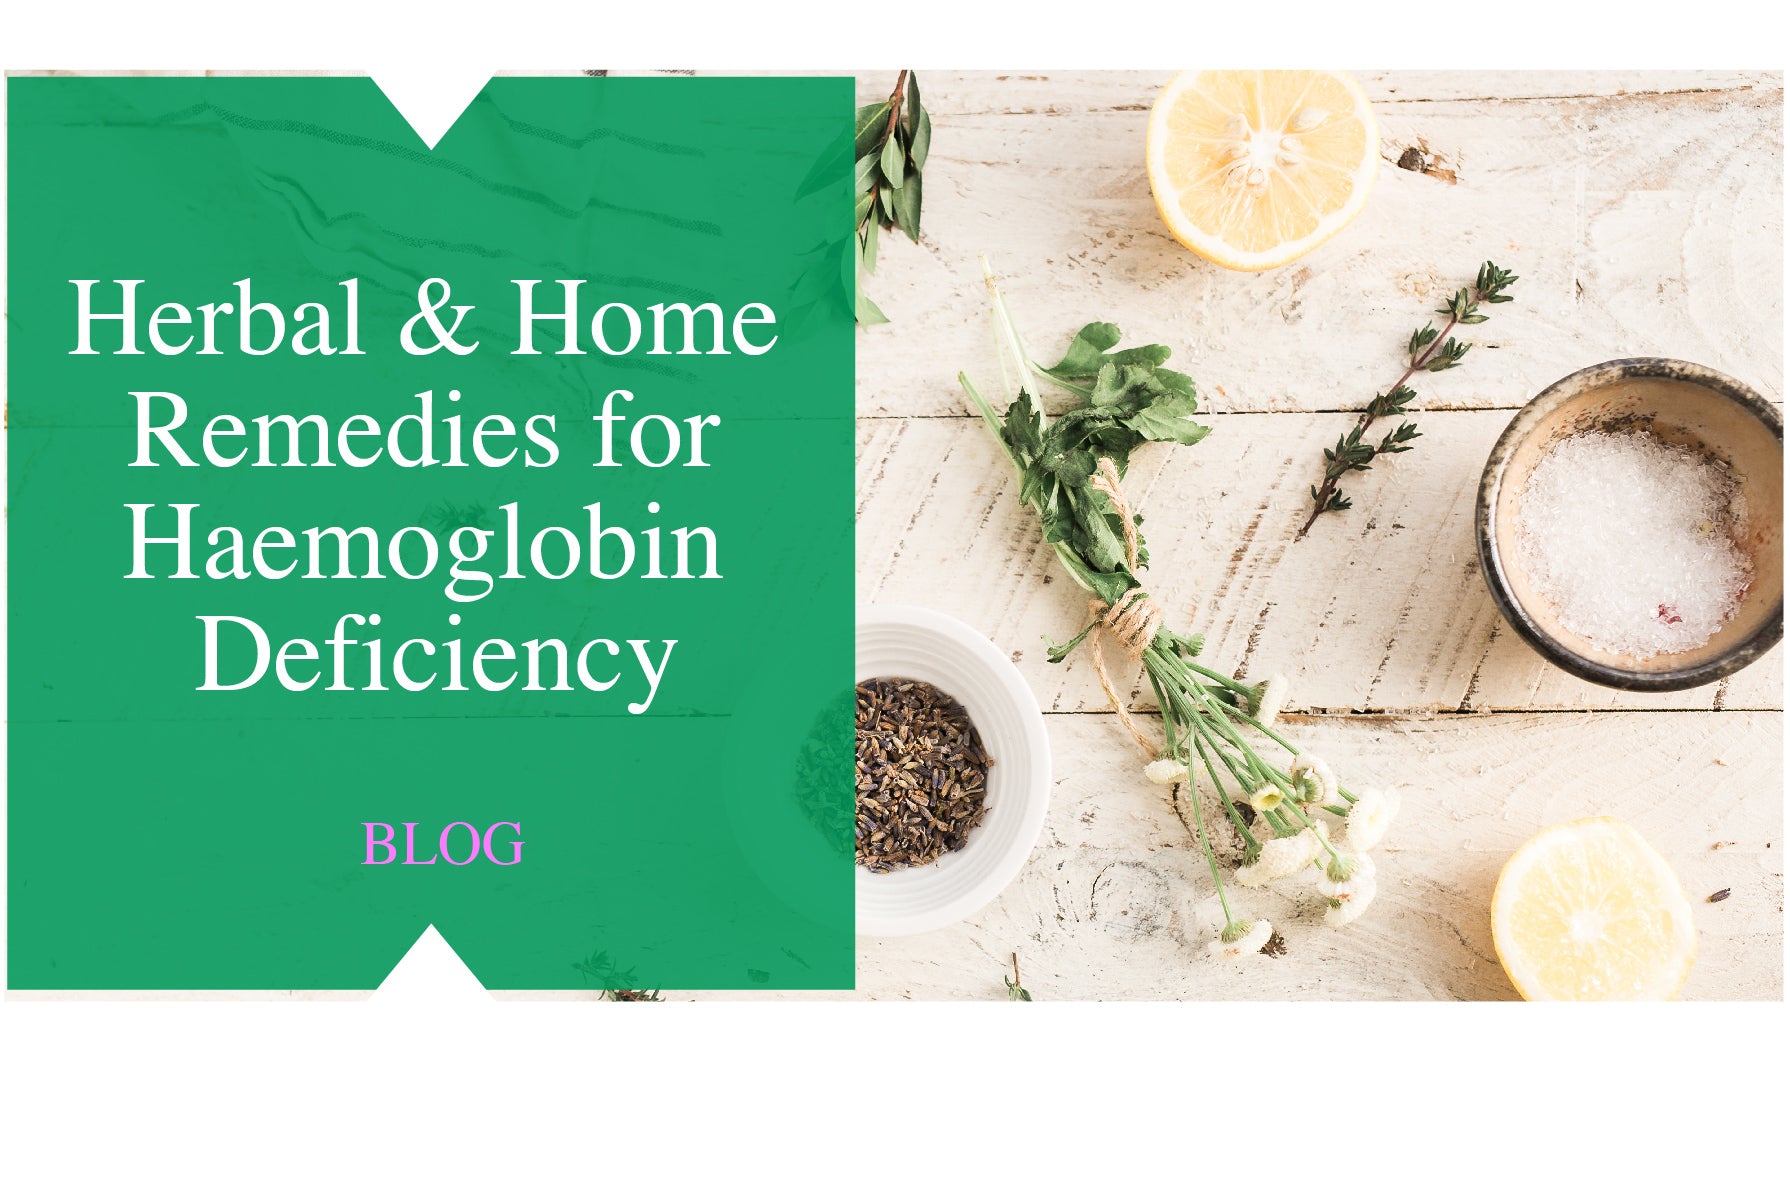 Herbal & Home Remedies for Haemoglobin Deficiency